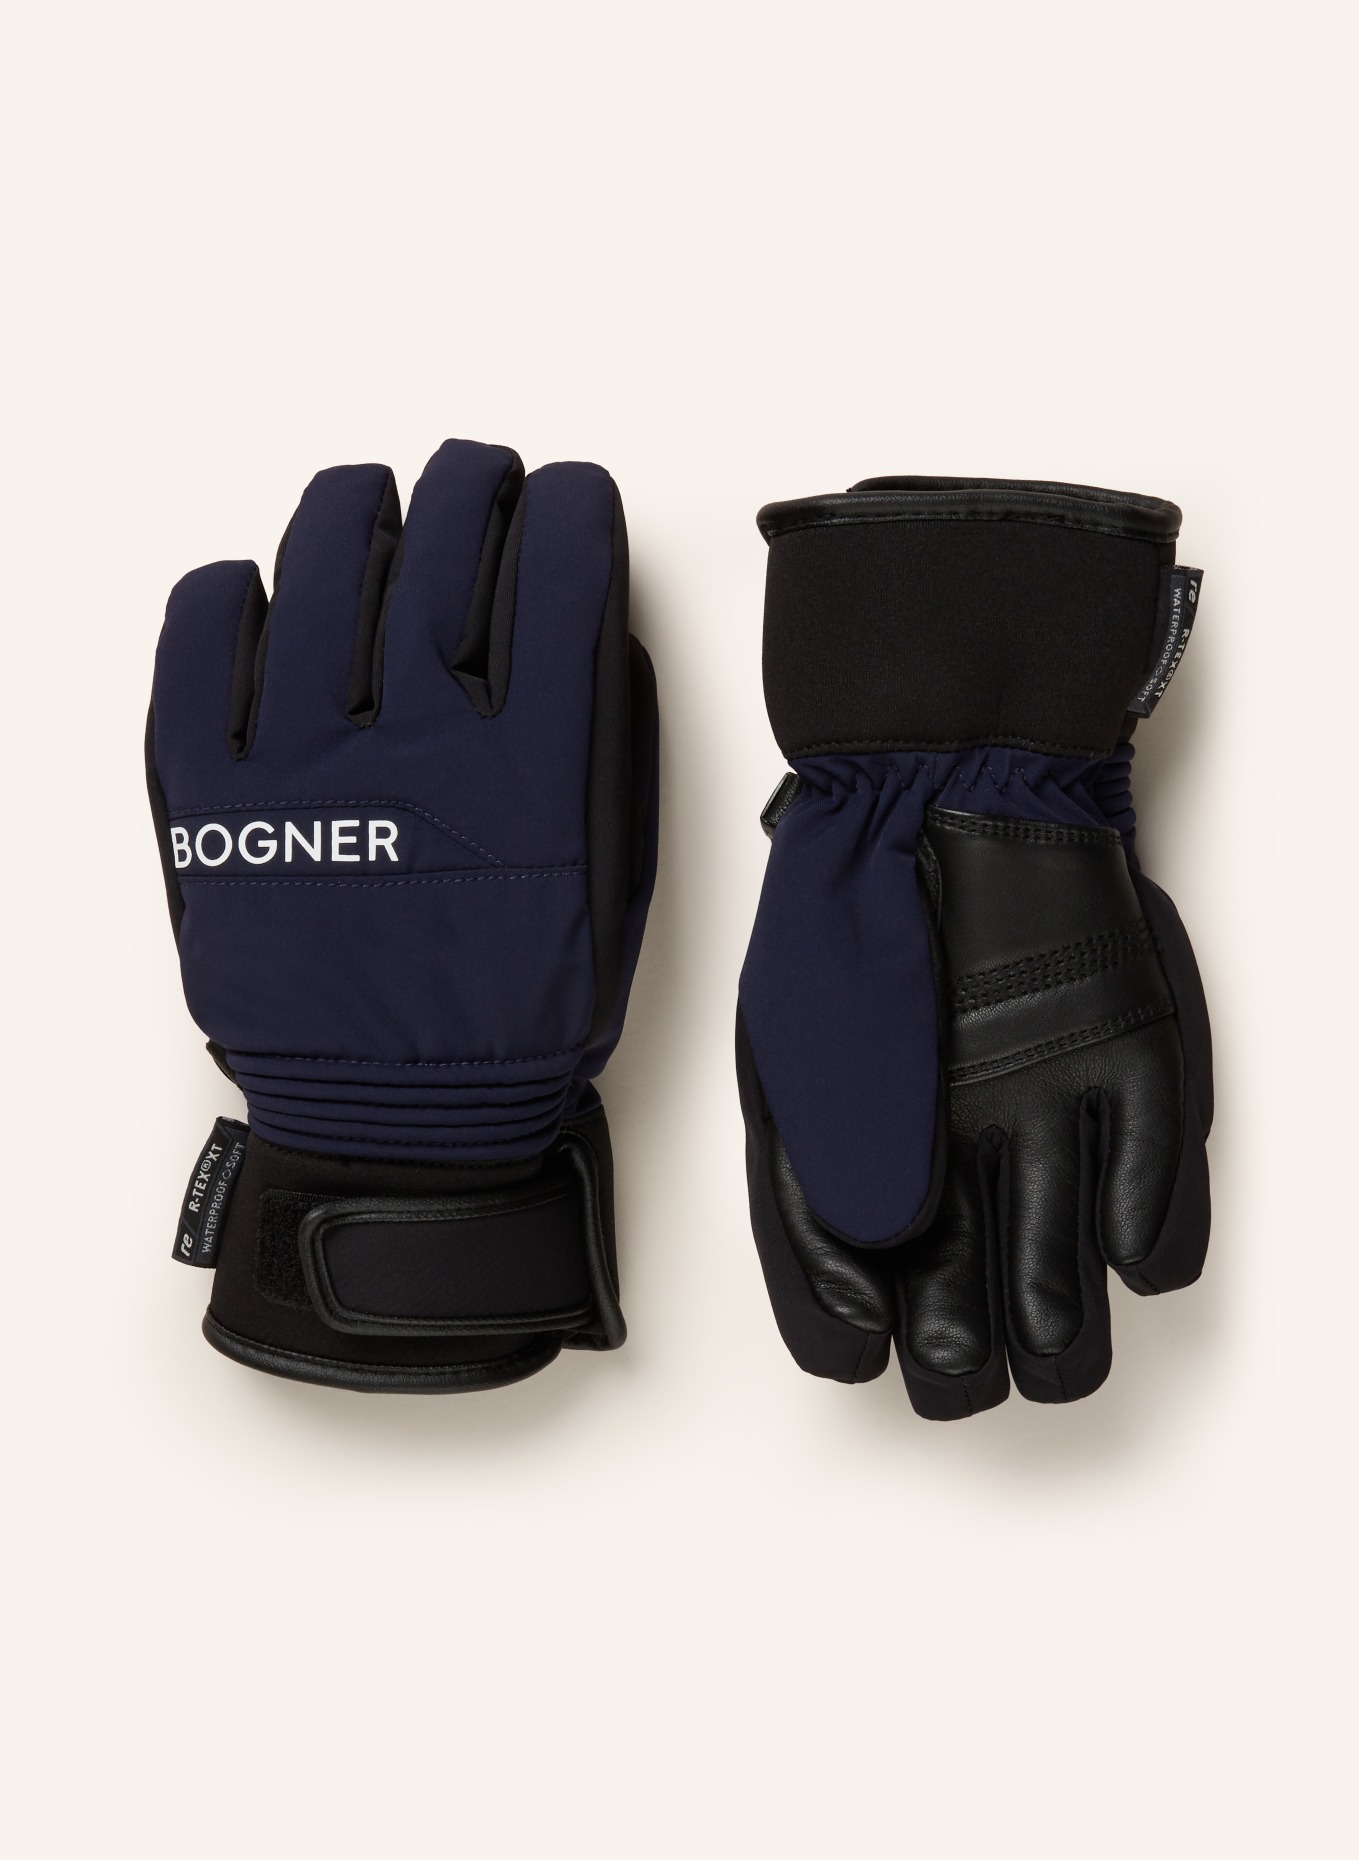 BOGNER Skihandschuhe JUDY in dunkelblau/ schwarz | Handschuhe